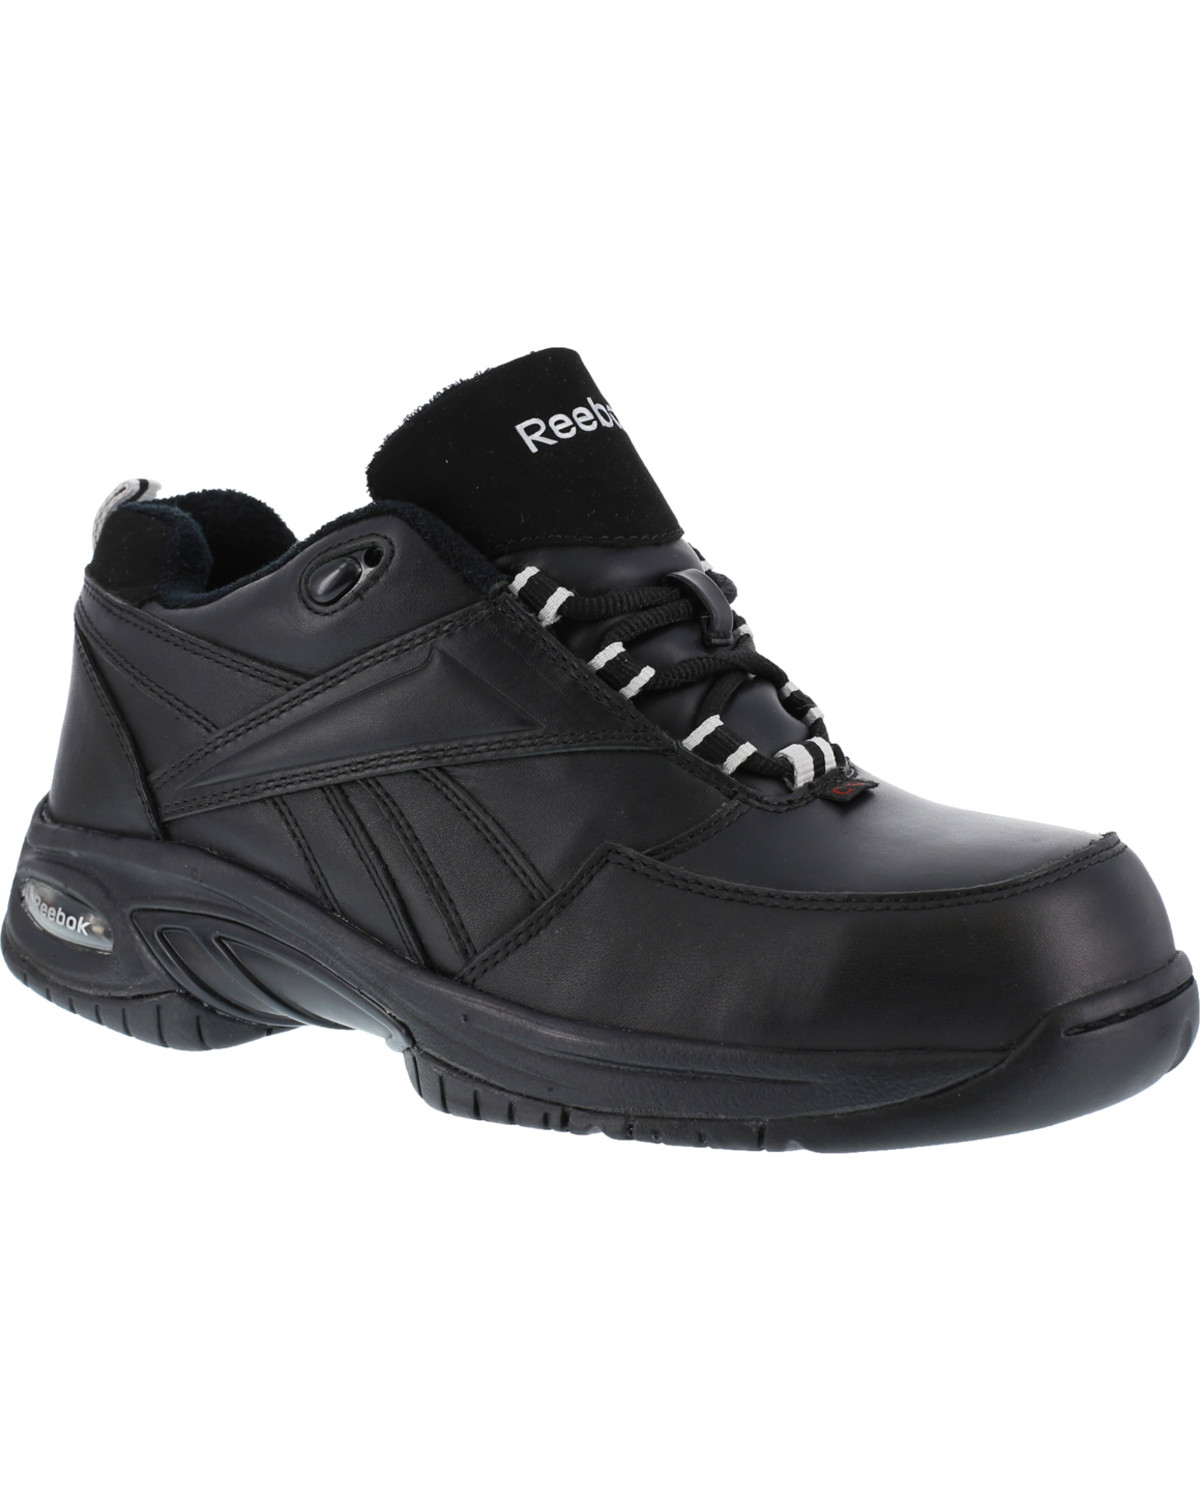 Reebok Men's Tyak High Performance Hiker Work Boots - Composite Toe